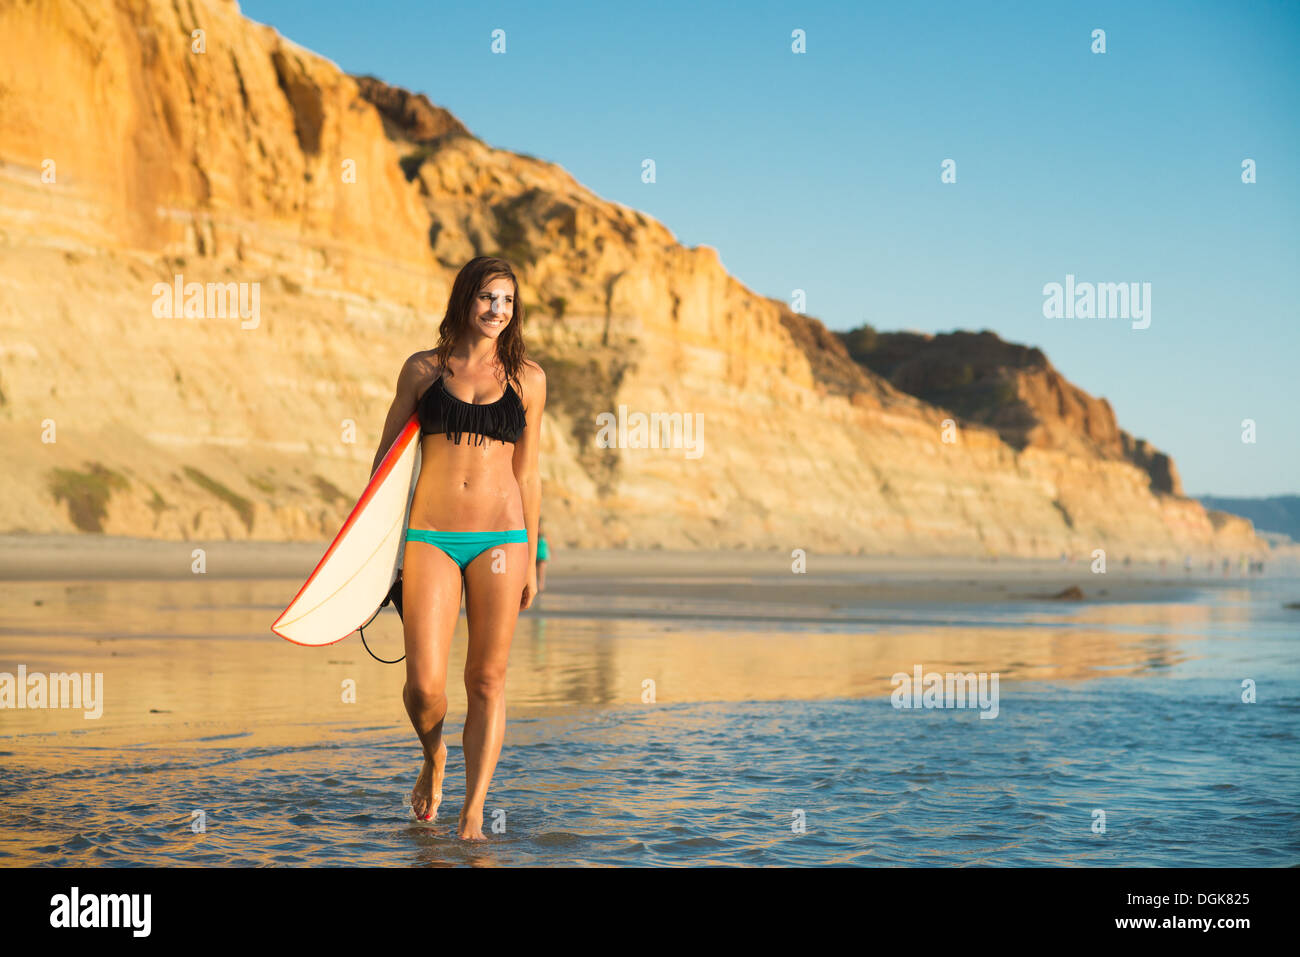 Young woman walking with surfboard, La Jolla, San Diego, California, USA Stock Photo